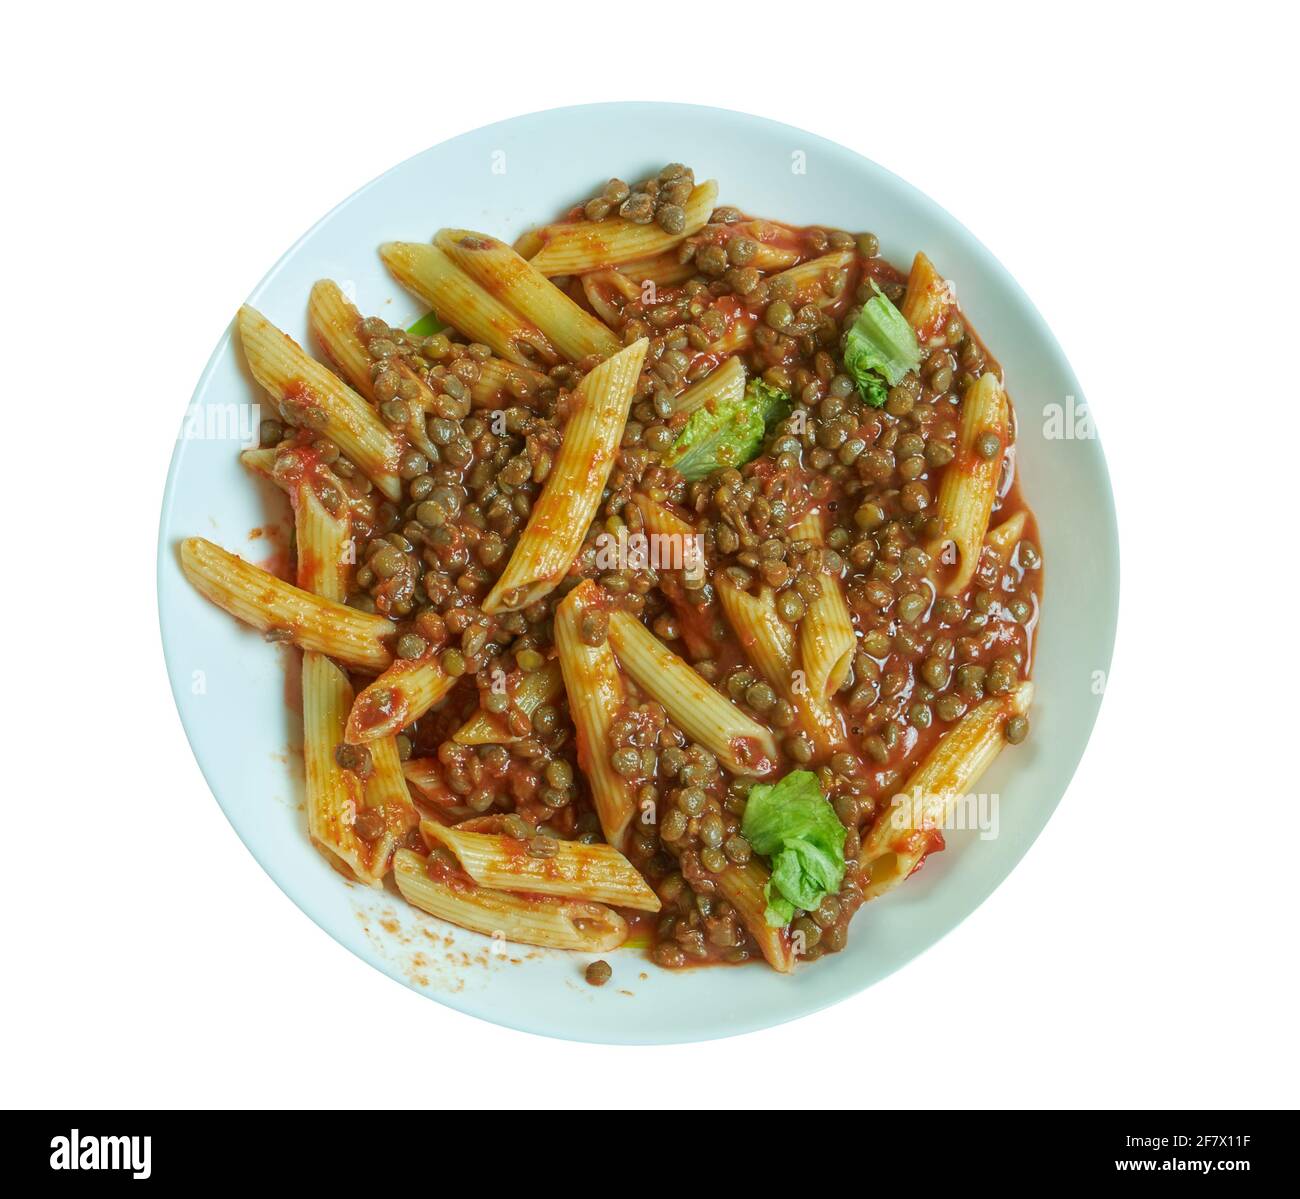 Minestra di lenticchie e pasta - Umbrian  Pasta and  lentil soup Stock Photo